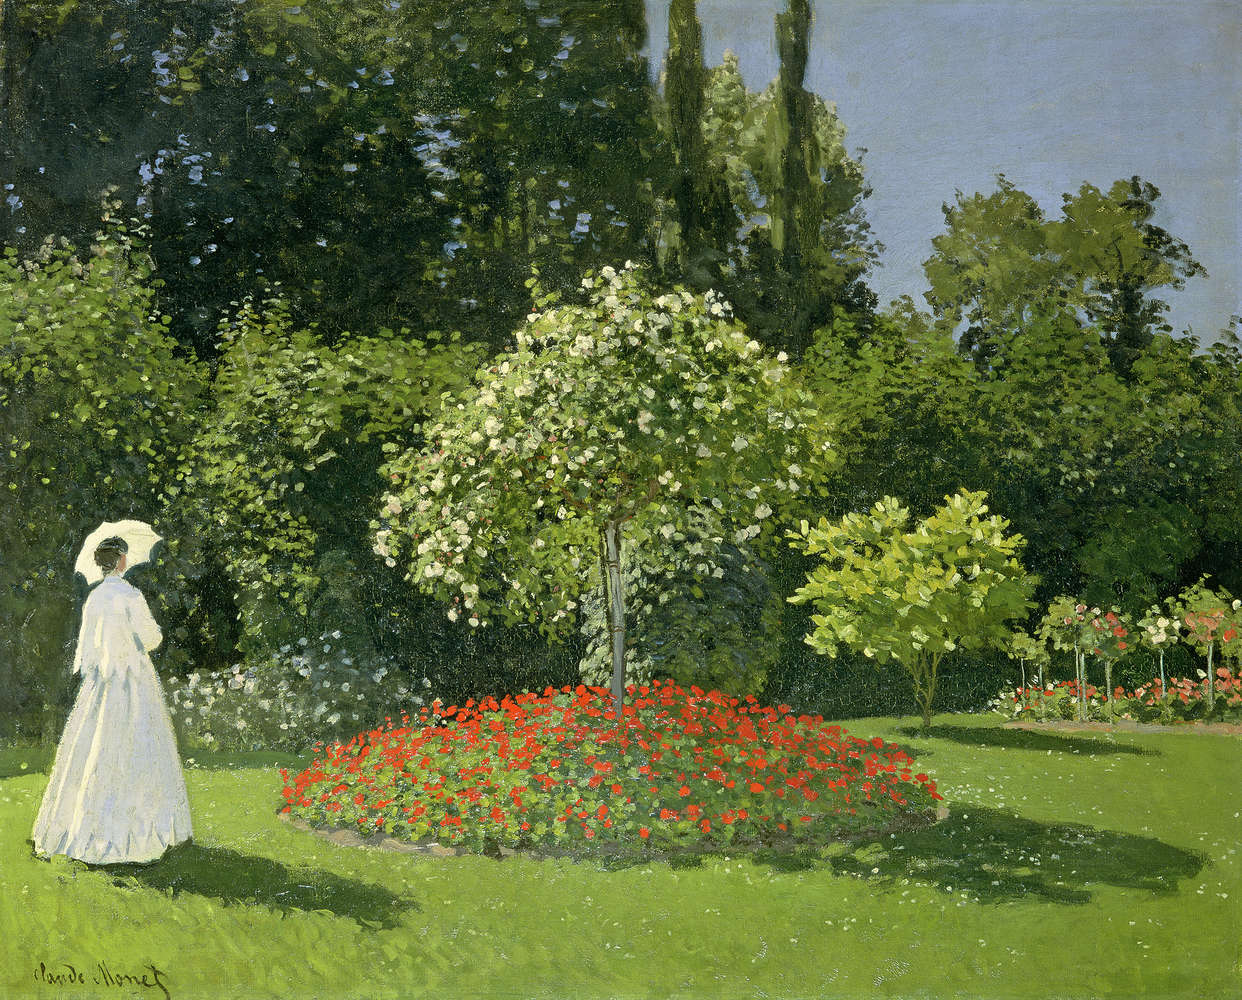             Photo wallpaper "Woman in the garden" by Claude Monet
        